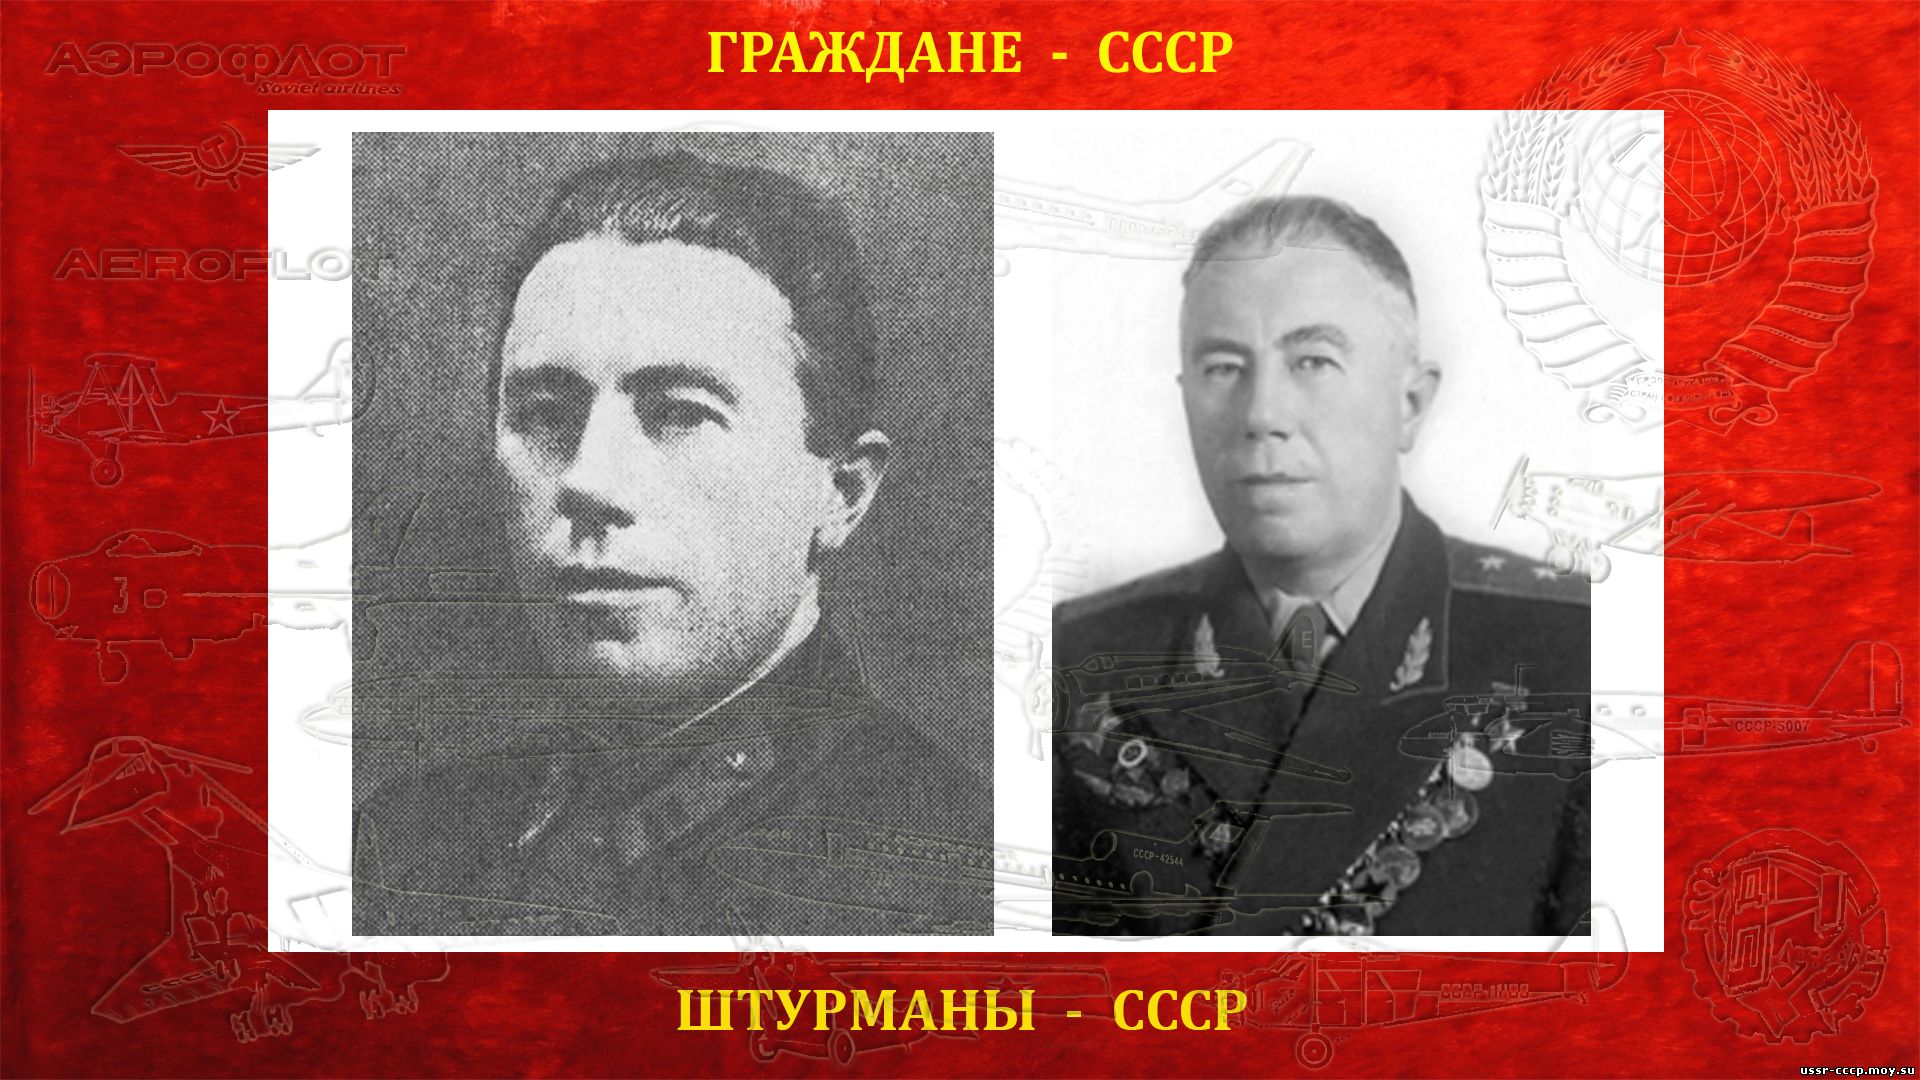 Данилин Сергей Алексеевич — Штурман авиации СССР